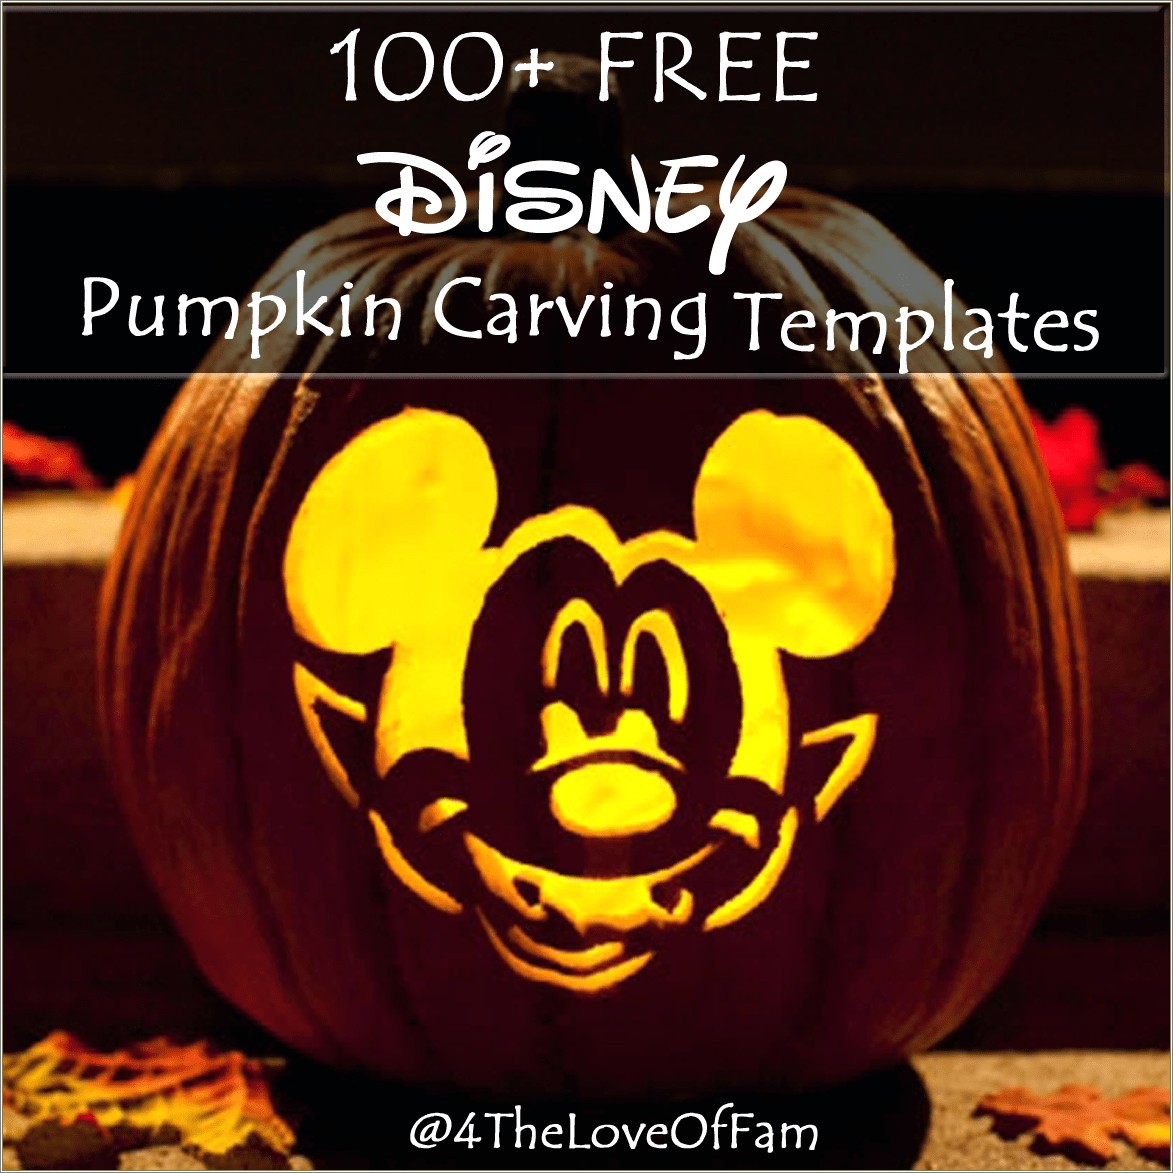 Pumpkin Carving Templates For Small Pumpkins Free